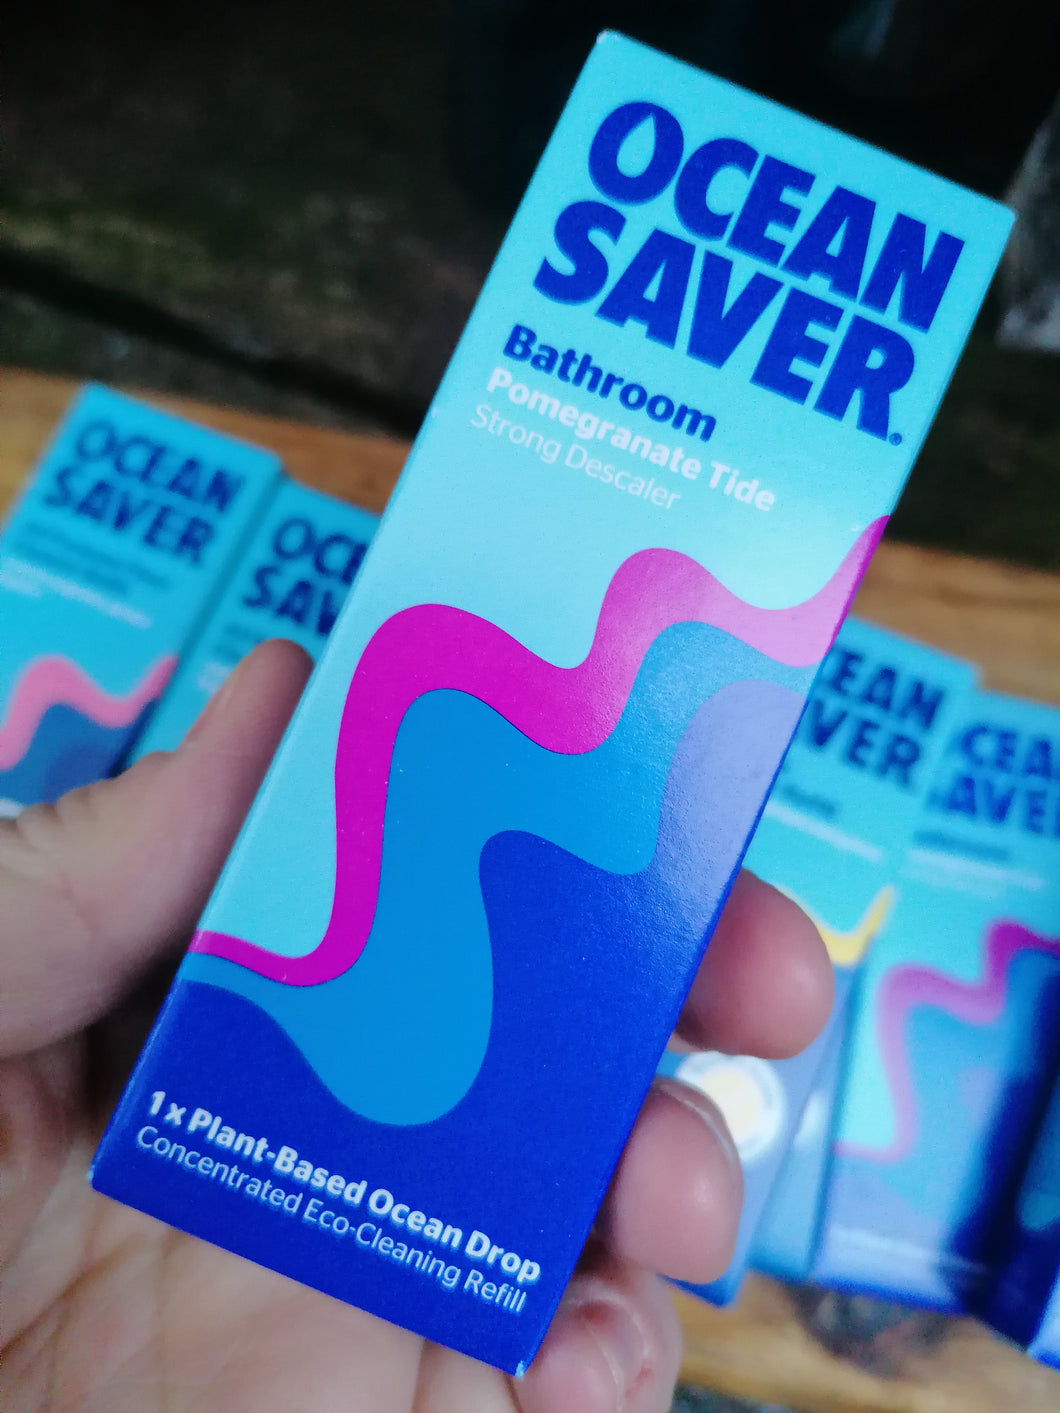 Ocean Saver Bathroom Descaler